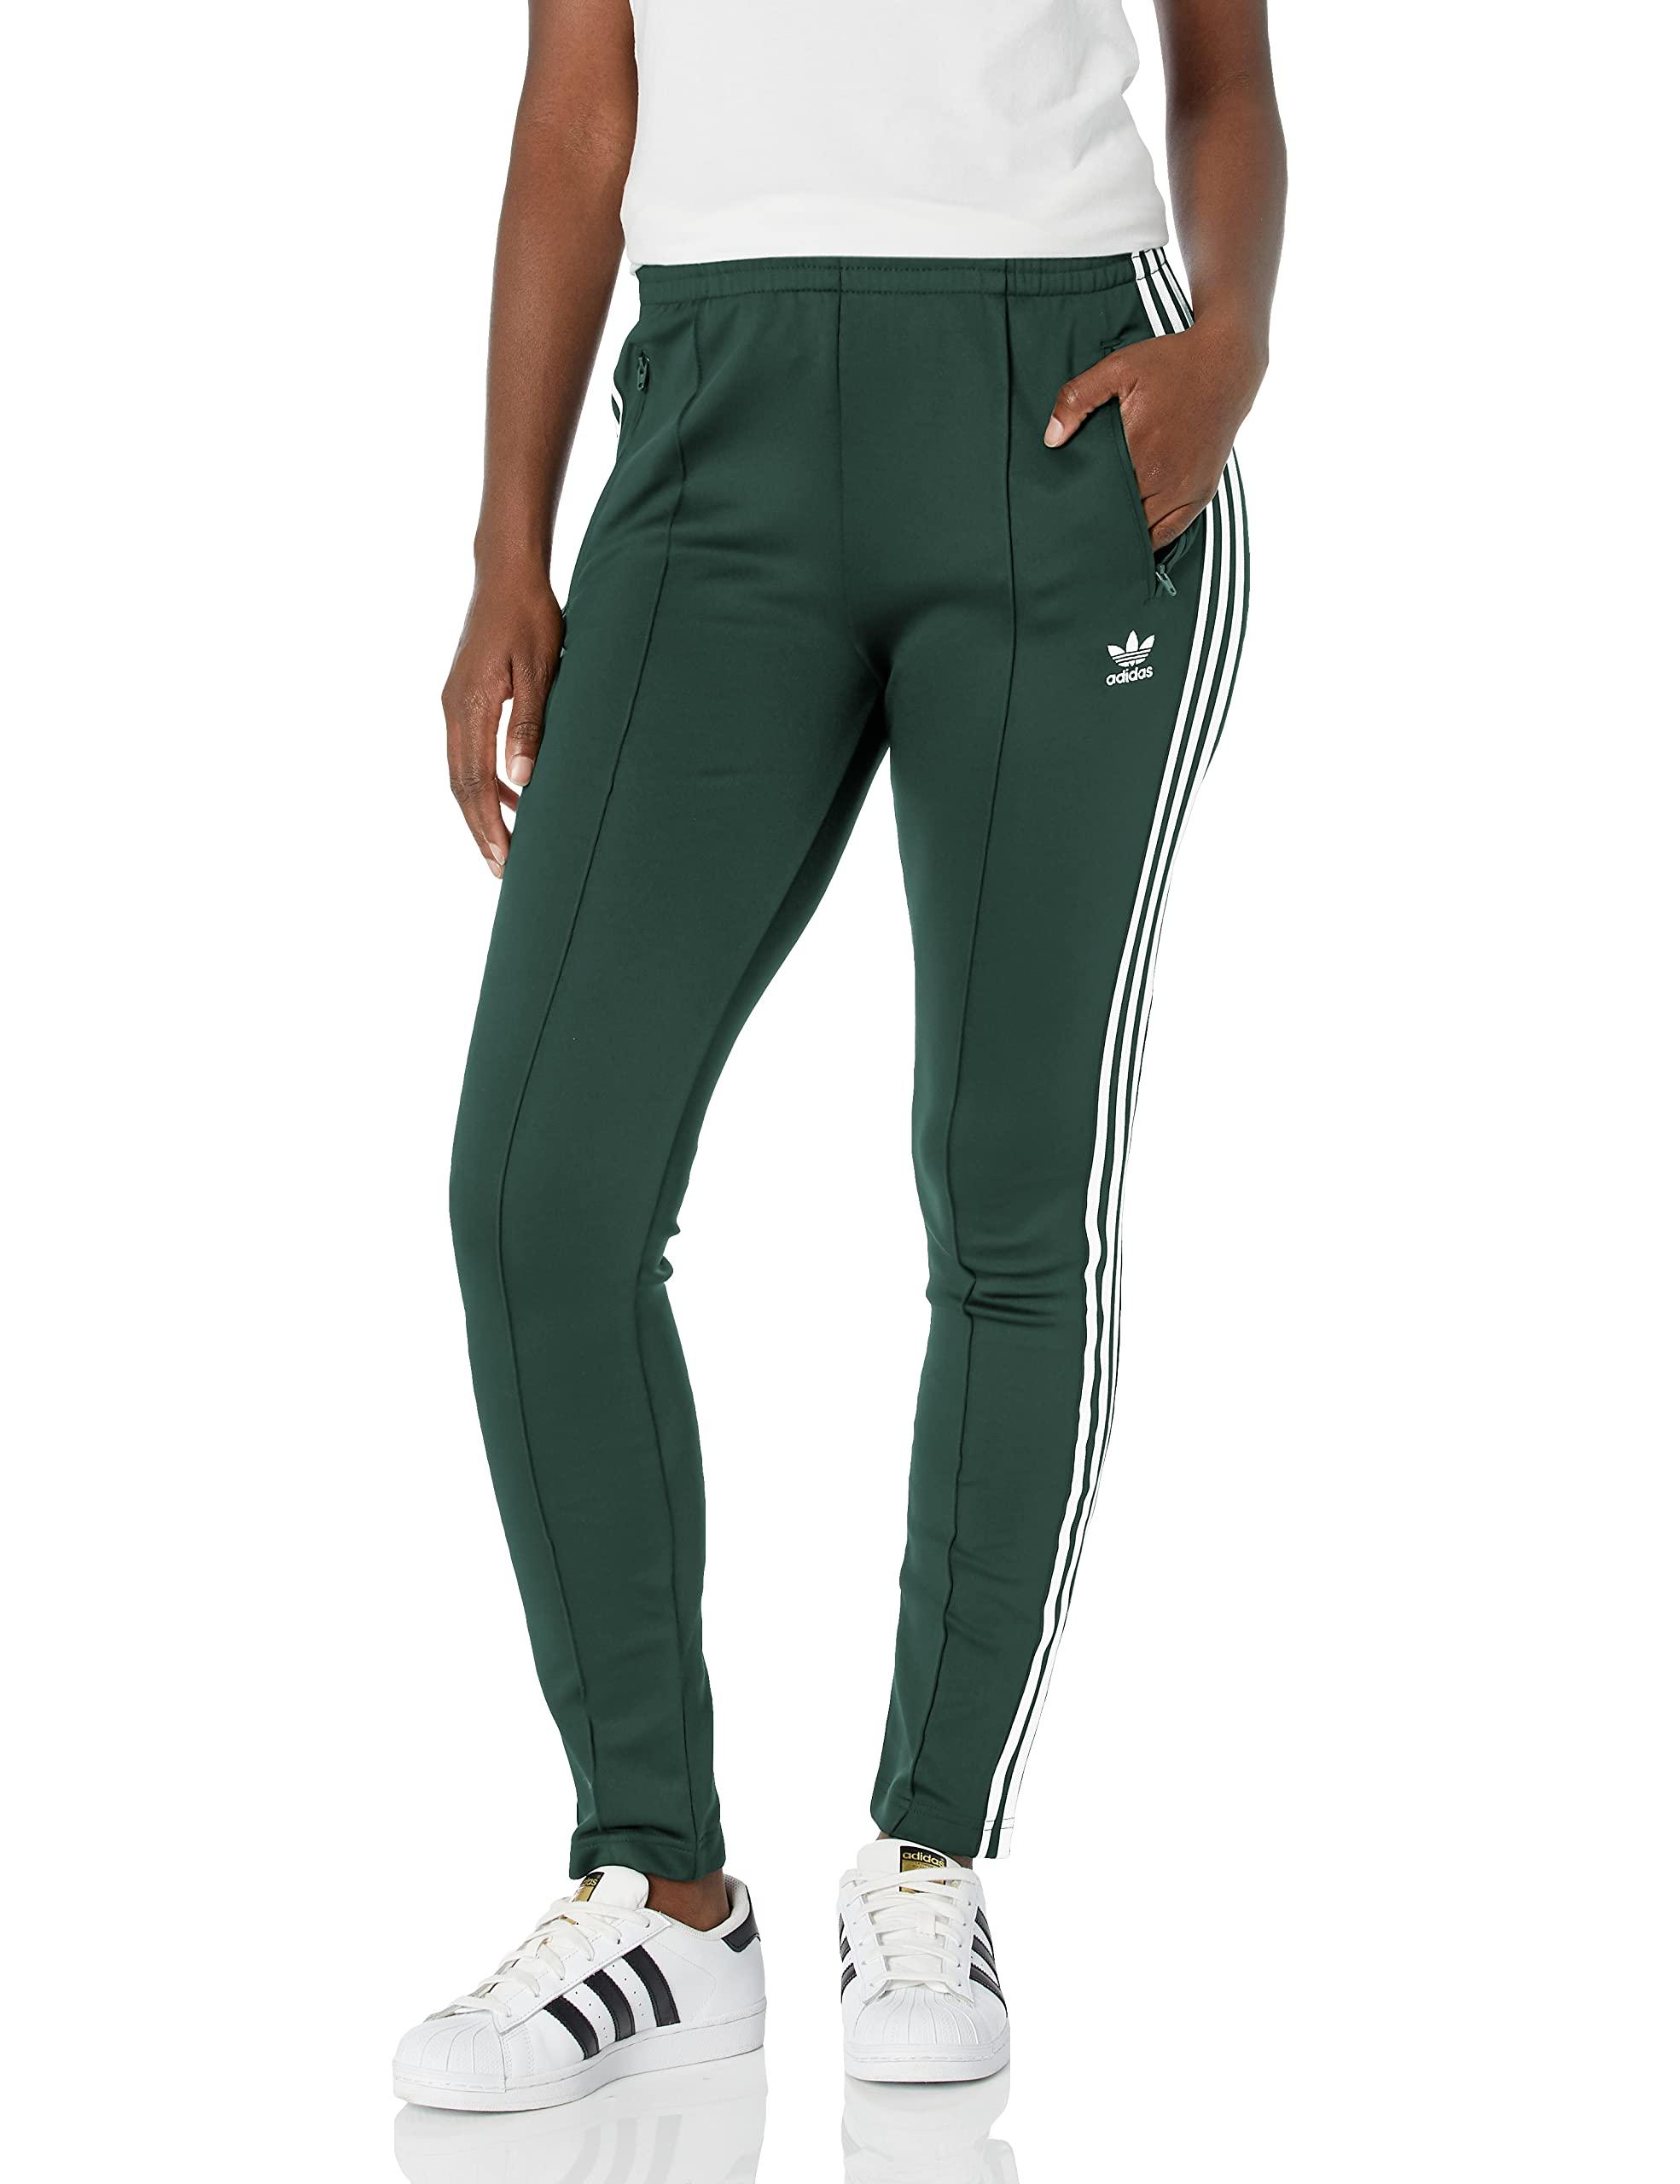 adidas Originals Superstar Track Pants in Green | Lyst